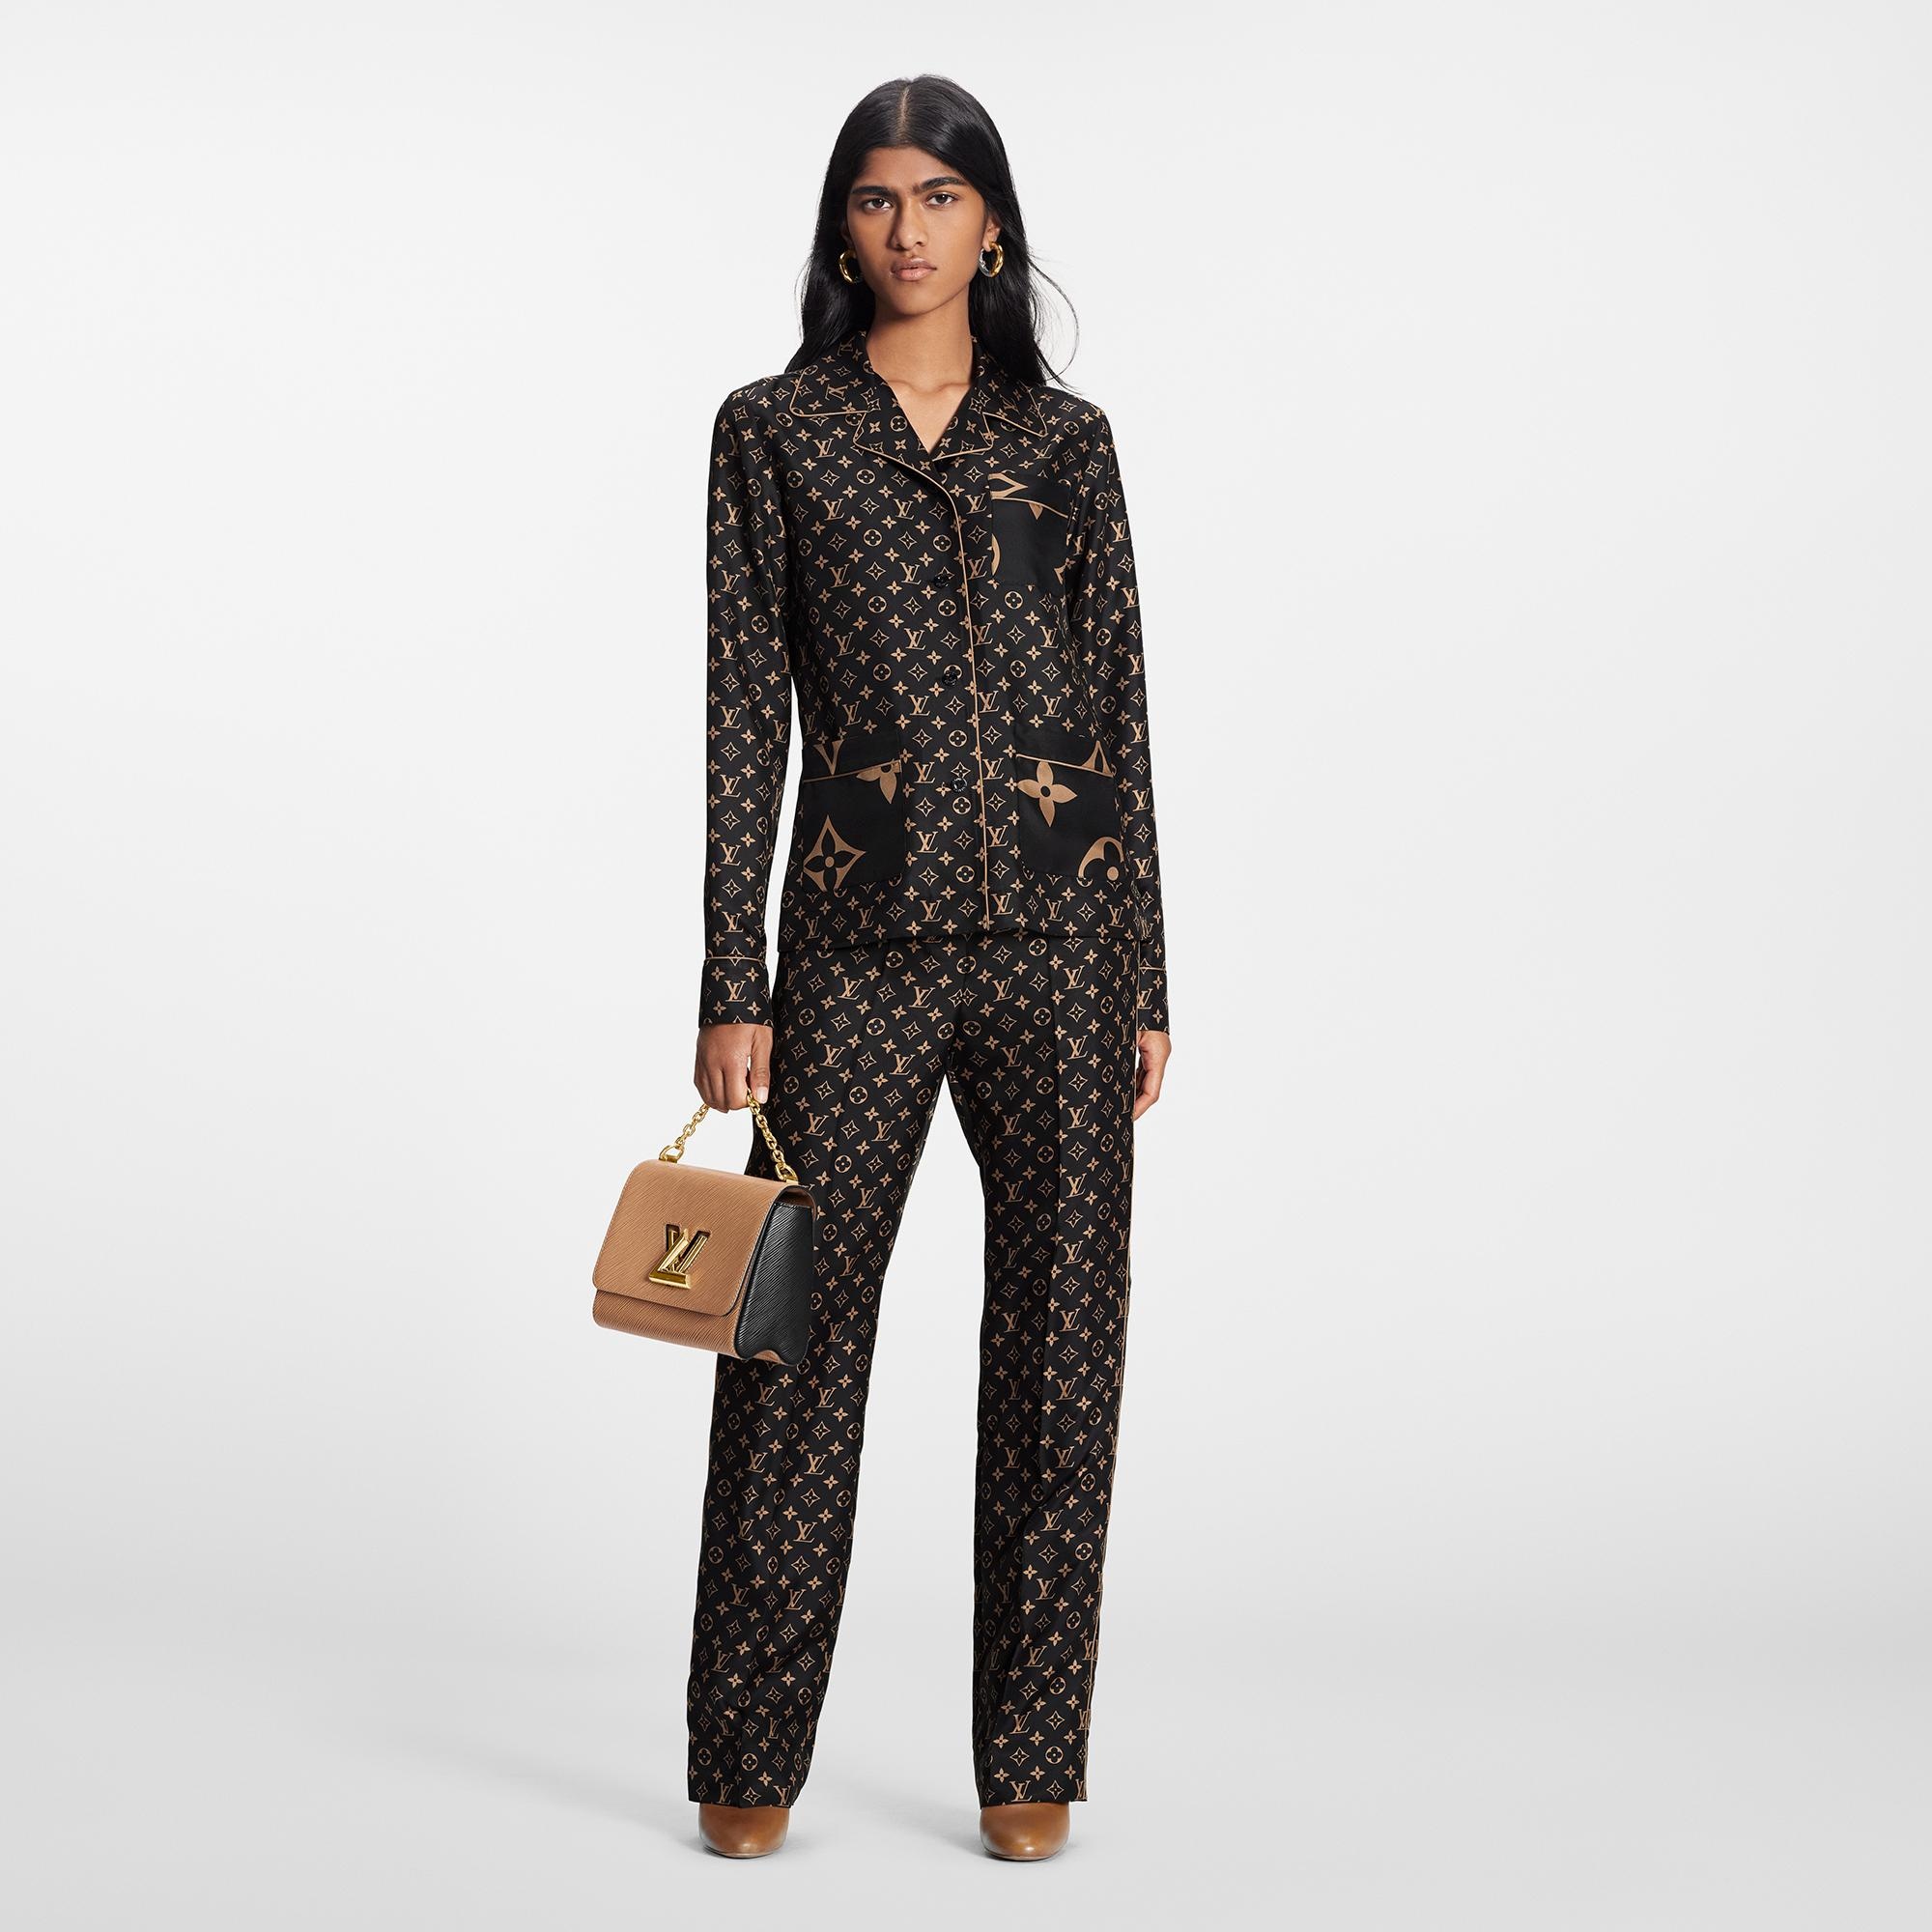 Louis Vuitton Mixed Monogram Pajama Shirt BLACK. Size 38